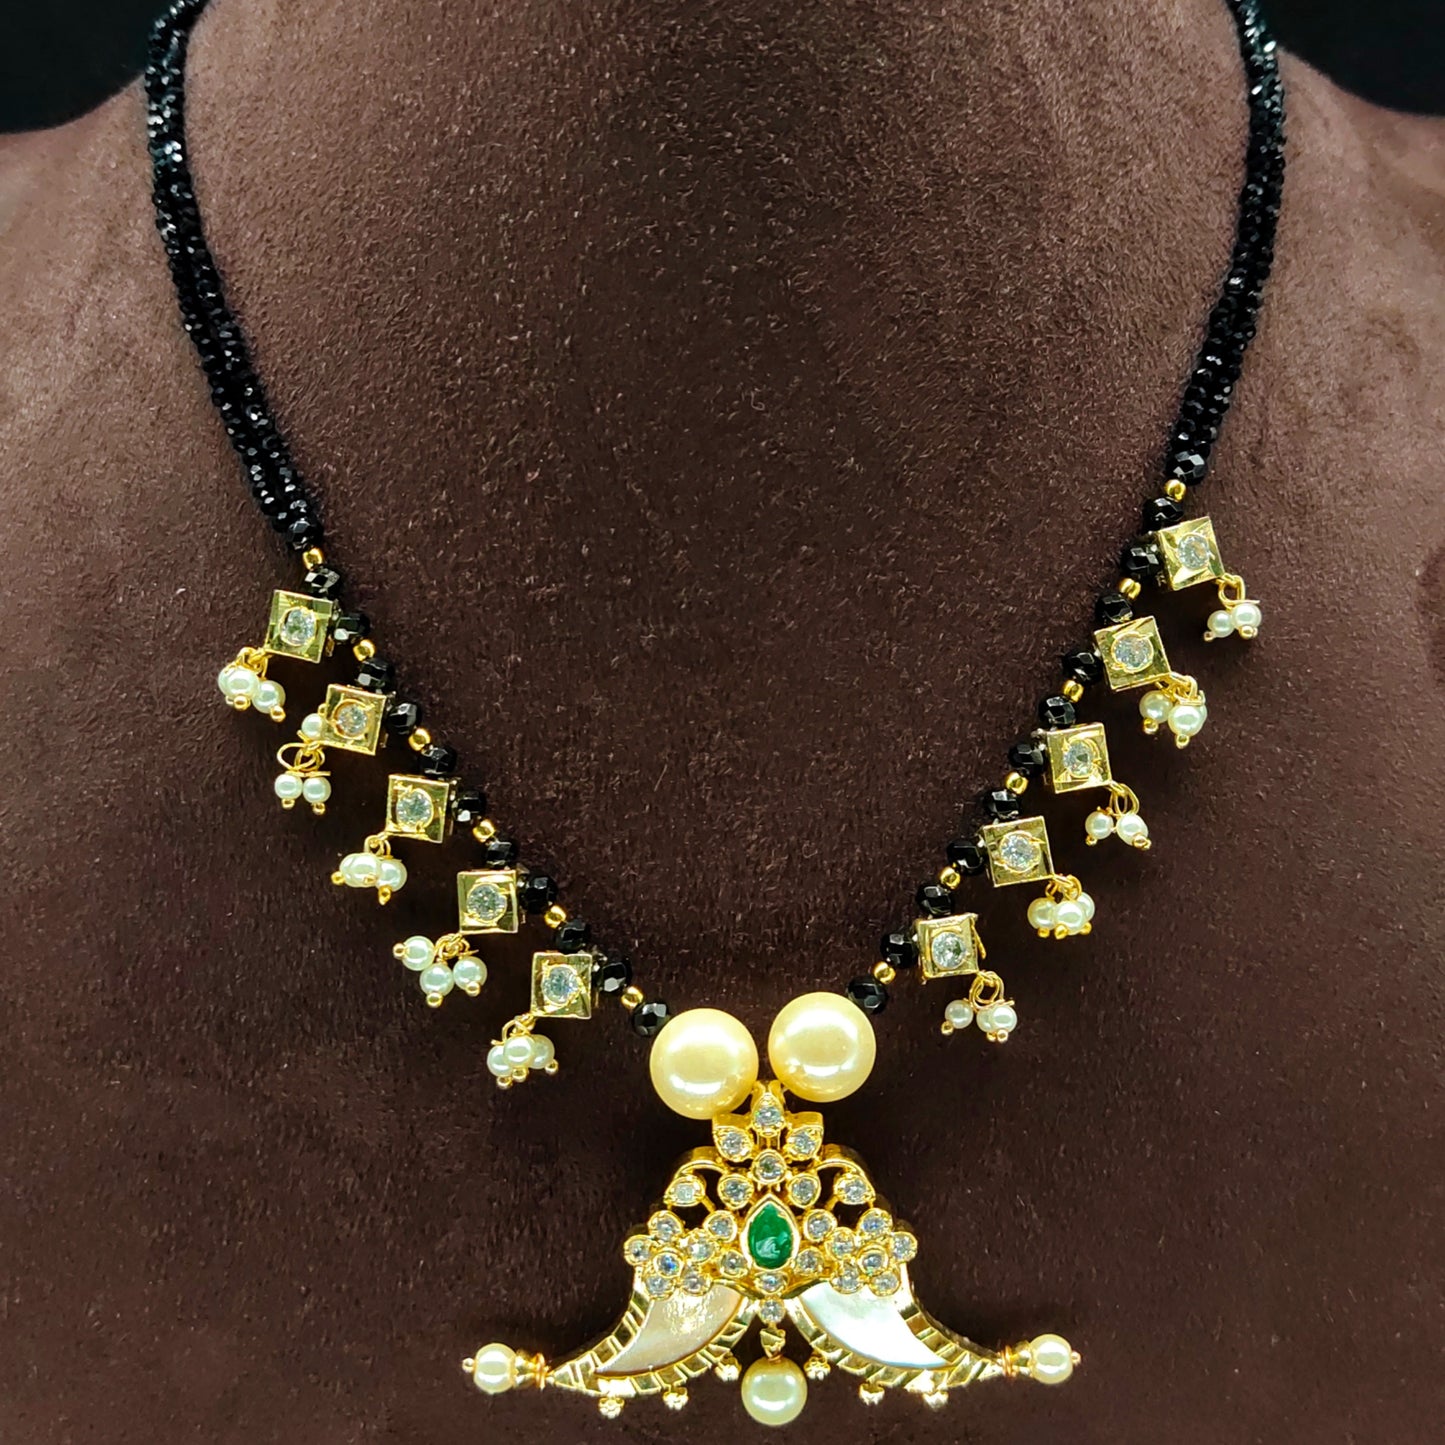 Nallapusalu Chain With Puligoru Pendant By Asp Fashion Jewellery